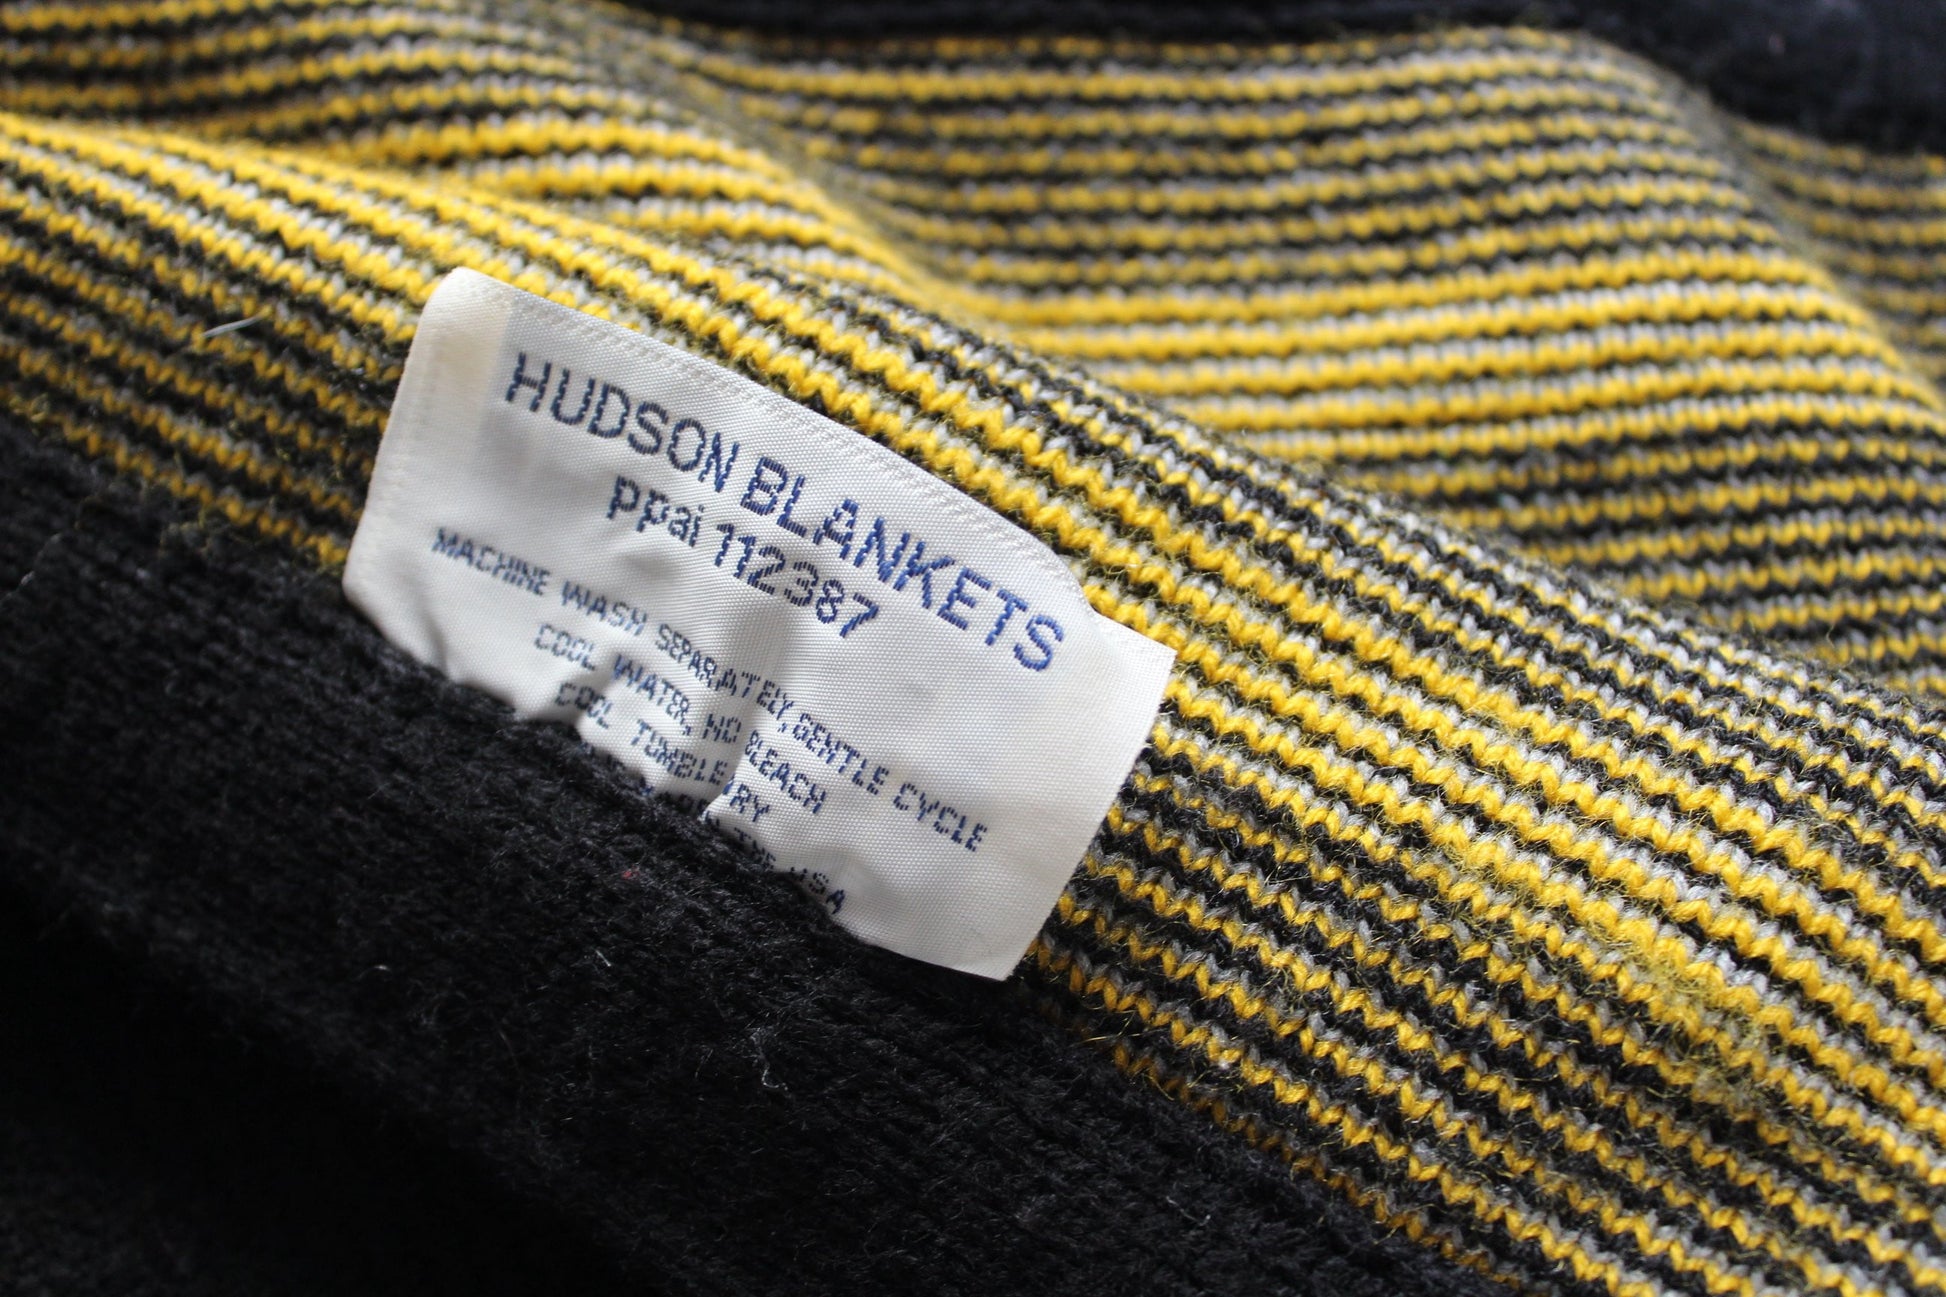 Cameron University Throw Blanket Vintage Acrylic Sweater Knit Aggies Logo all season use